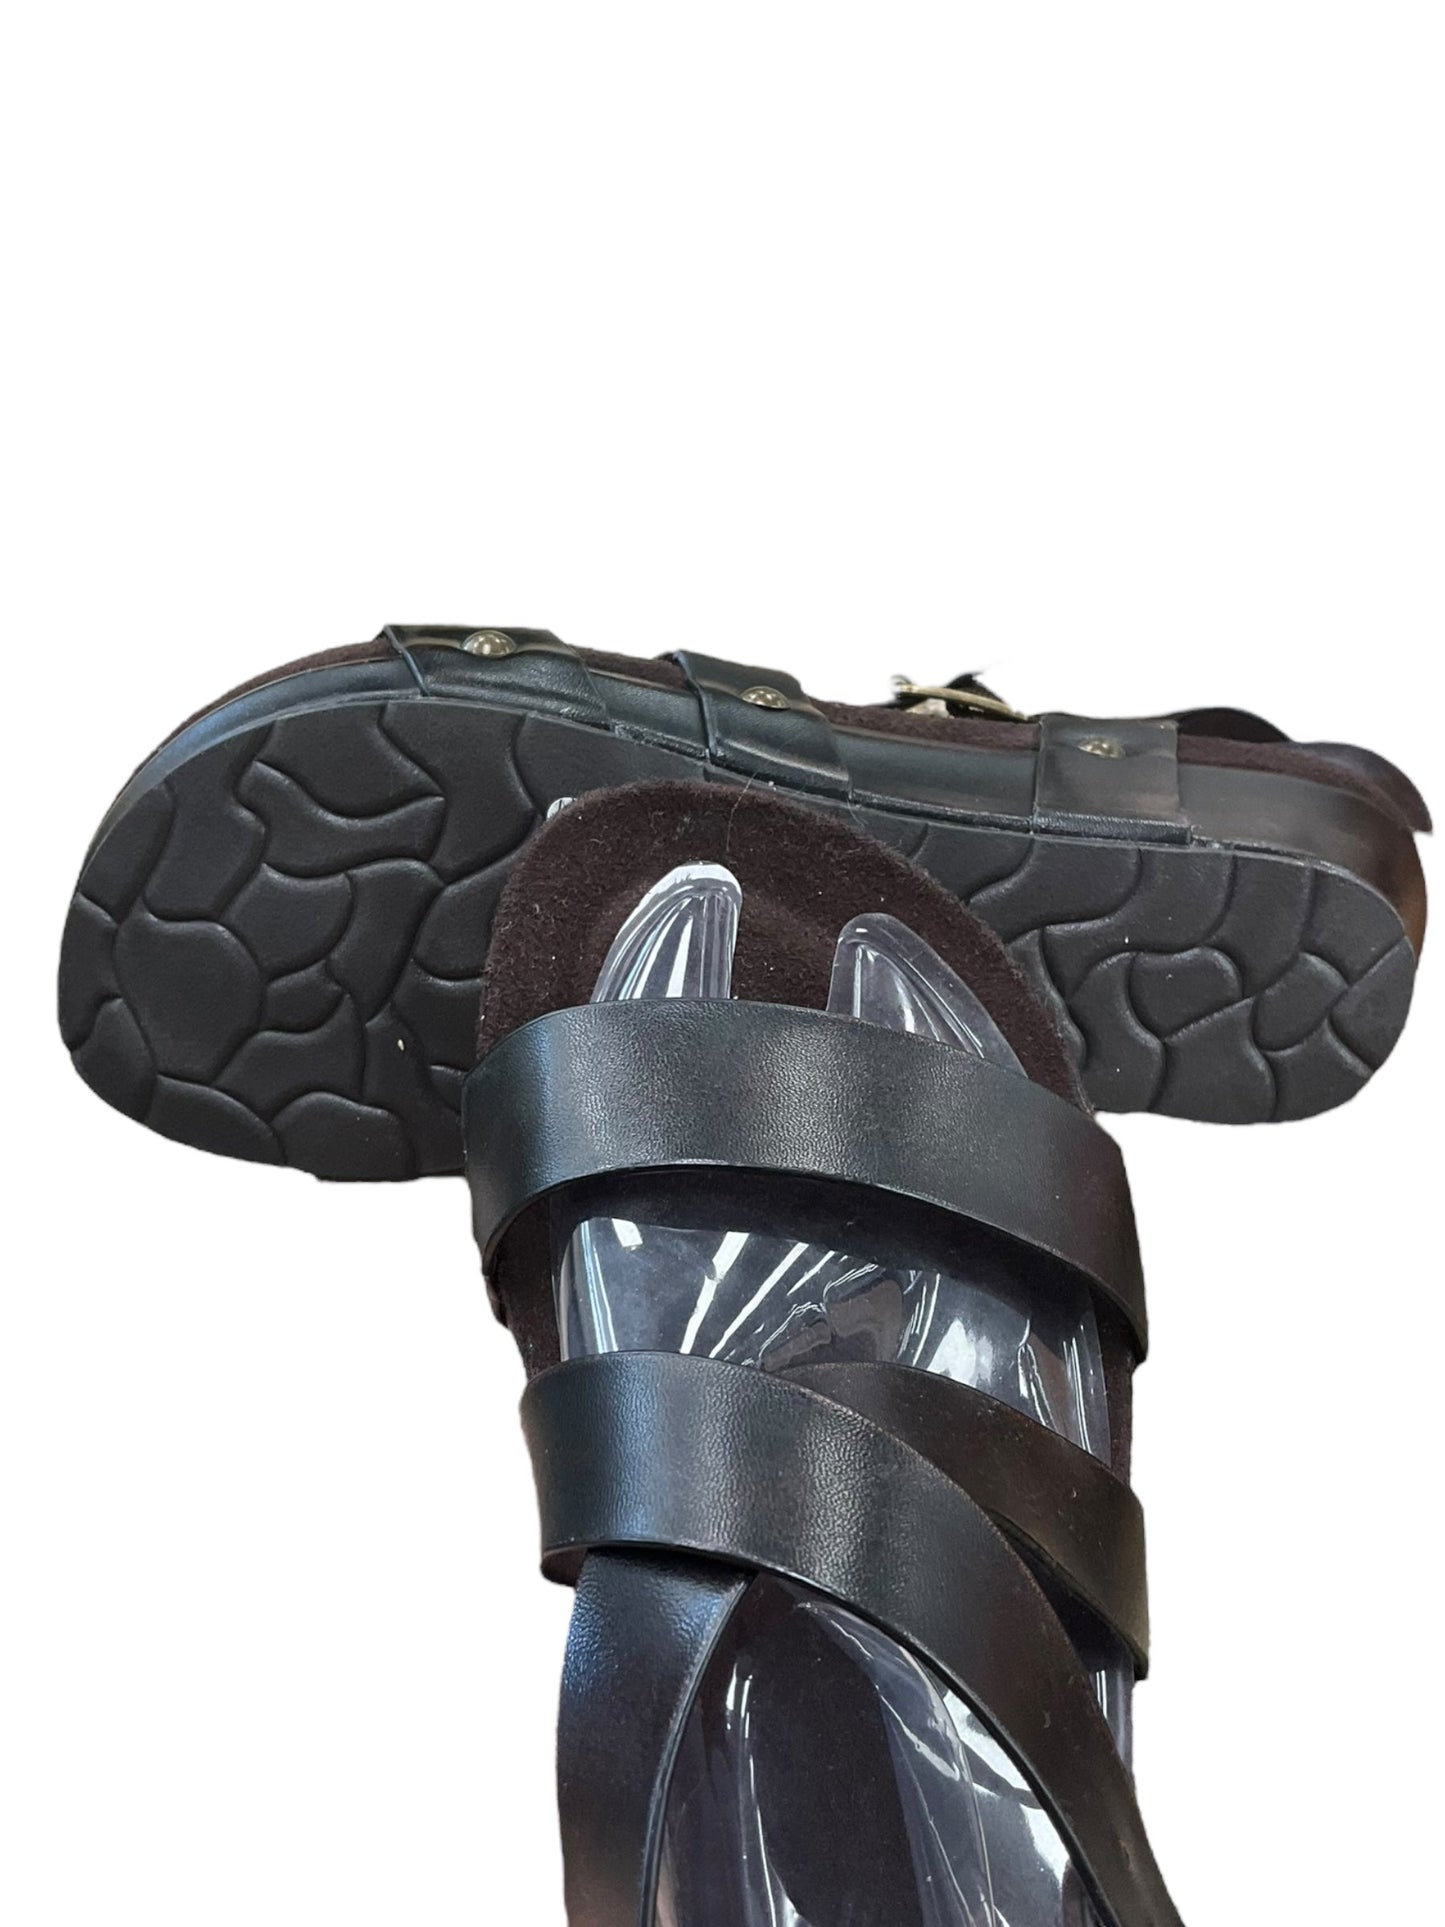 Brown Sandals Heels Platform Natural Reflections, Size 8